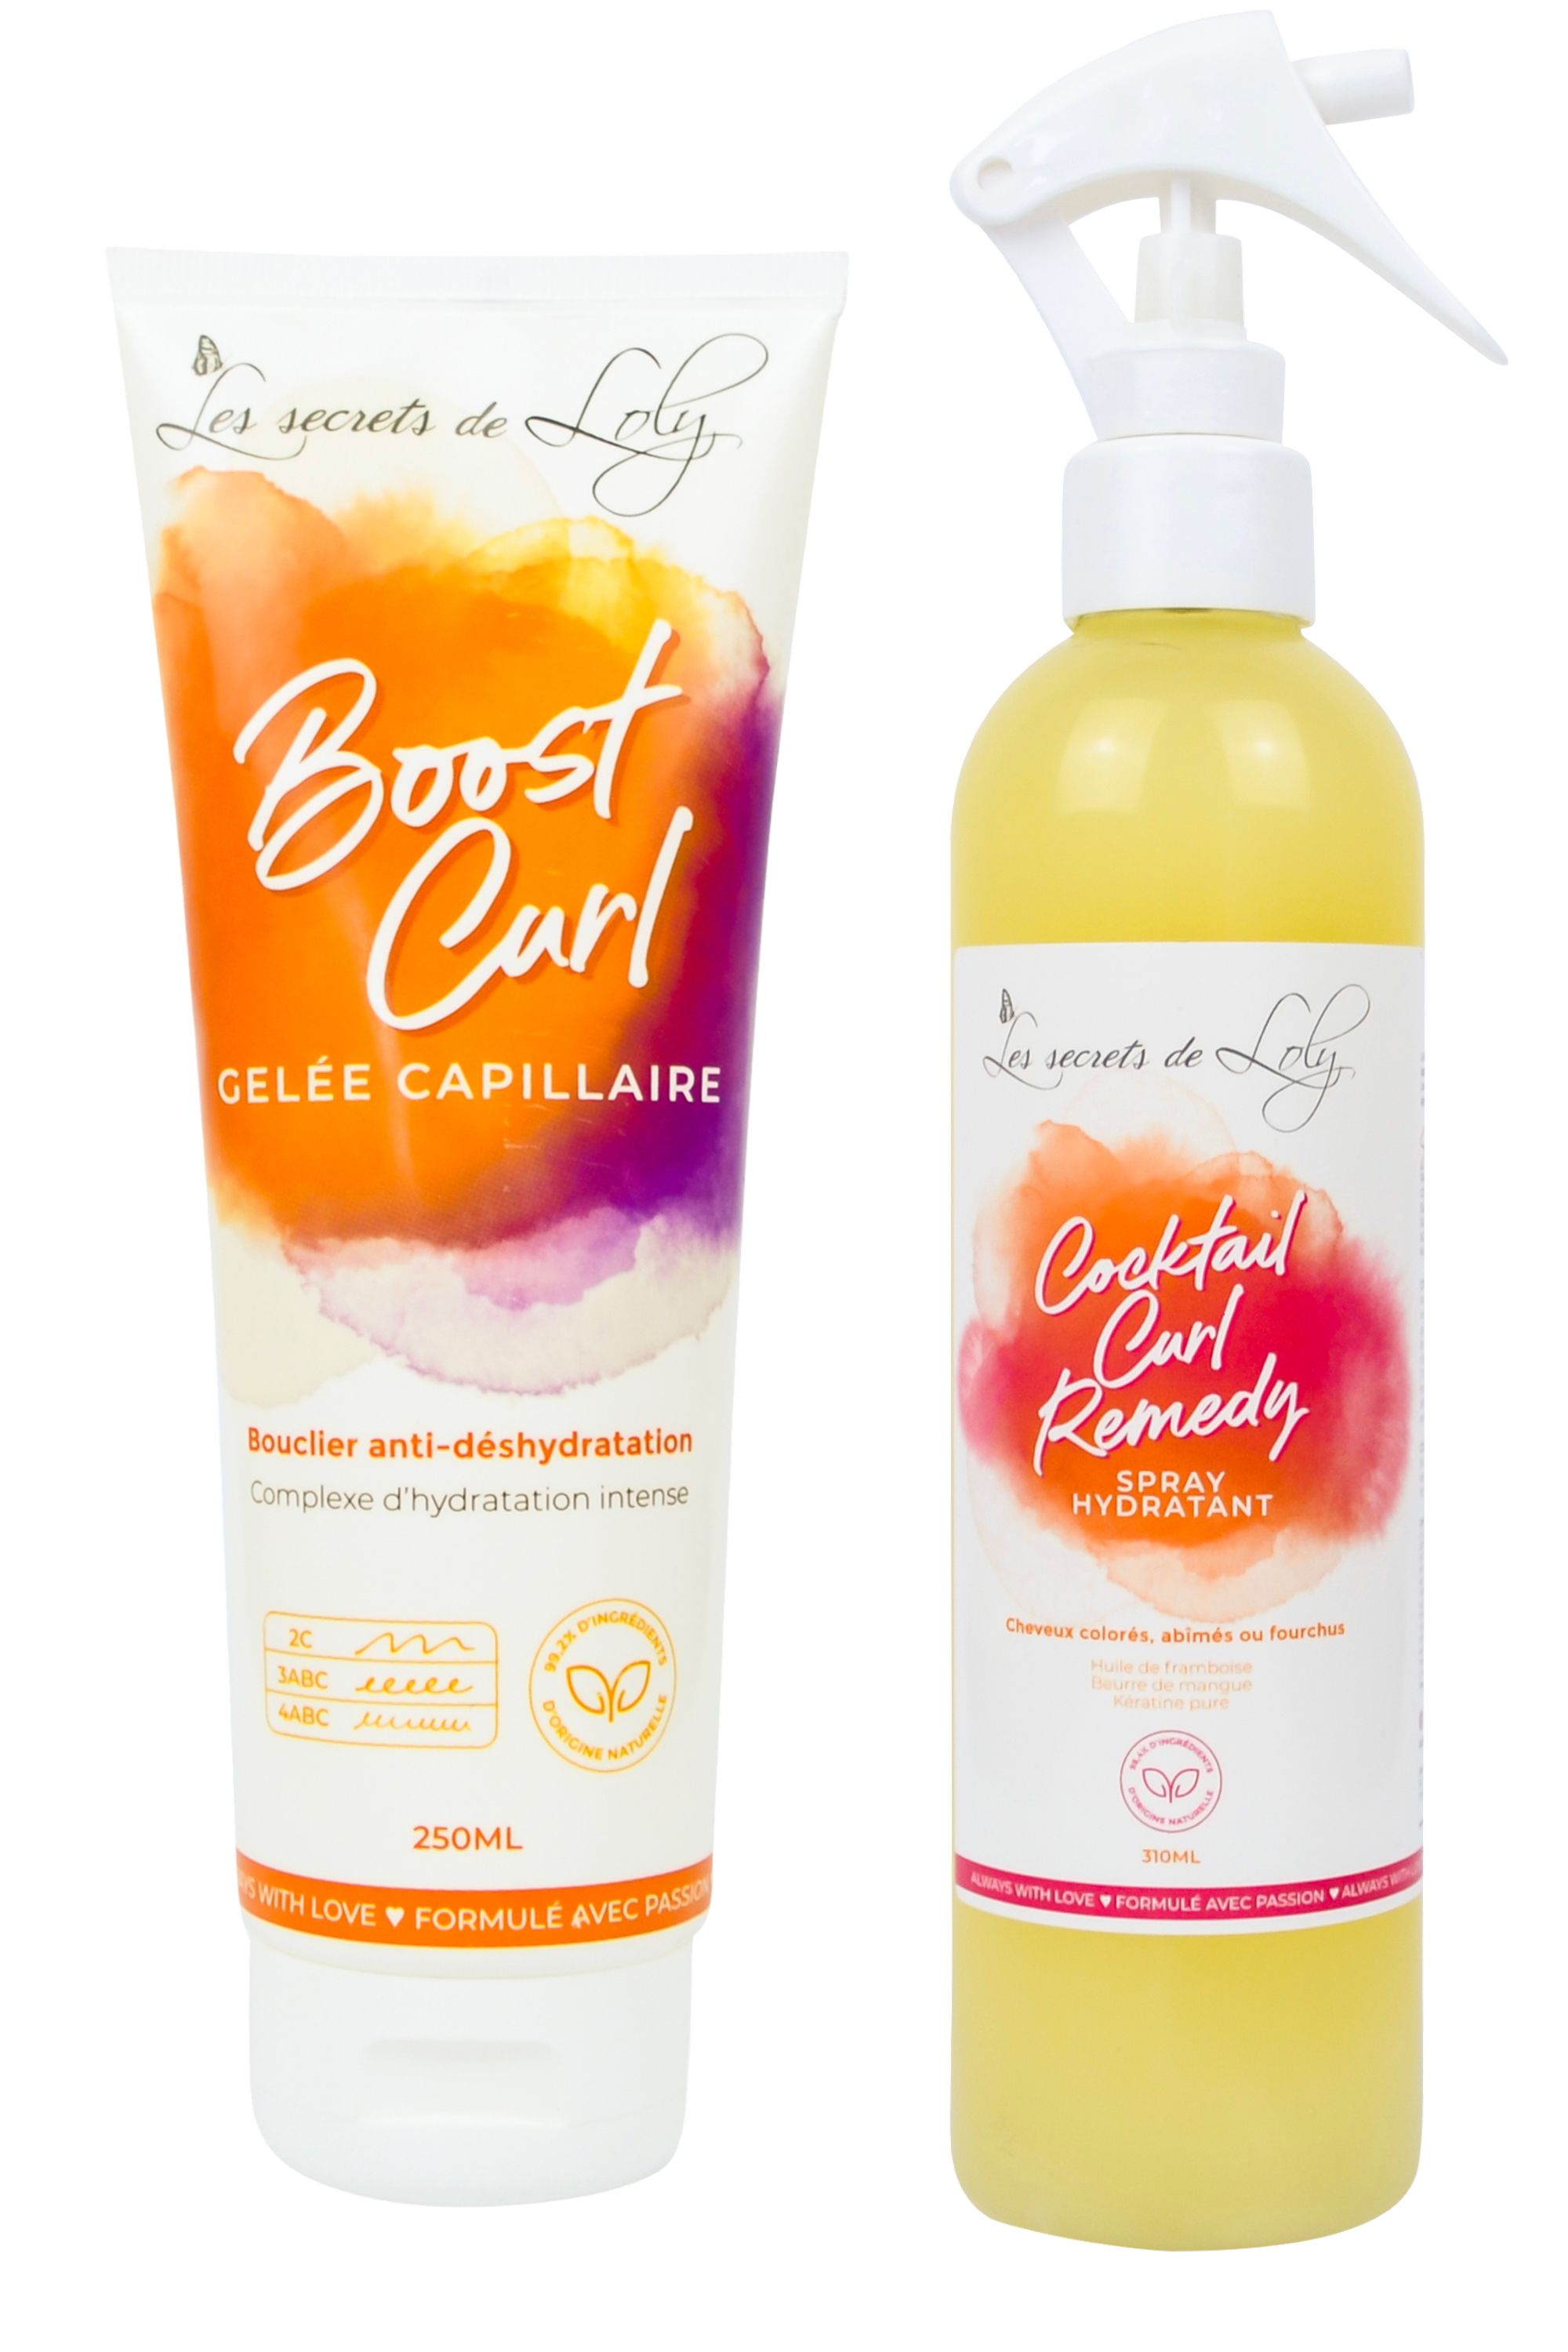 Boost Curl - Soin sans rinçage, Gelée capillaire, bouclier anti